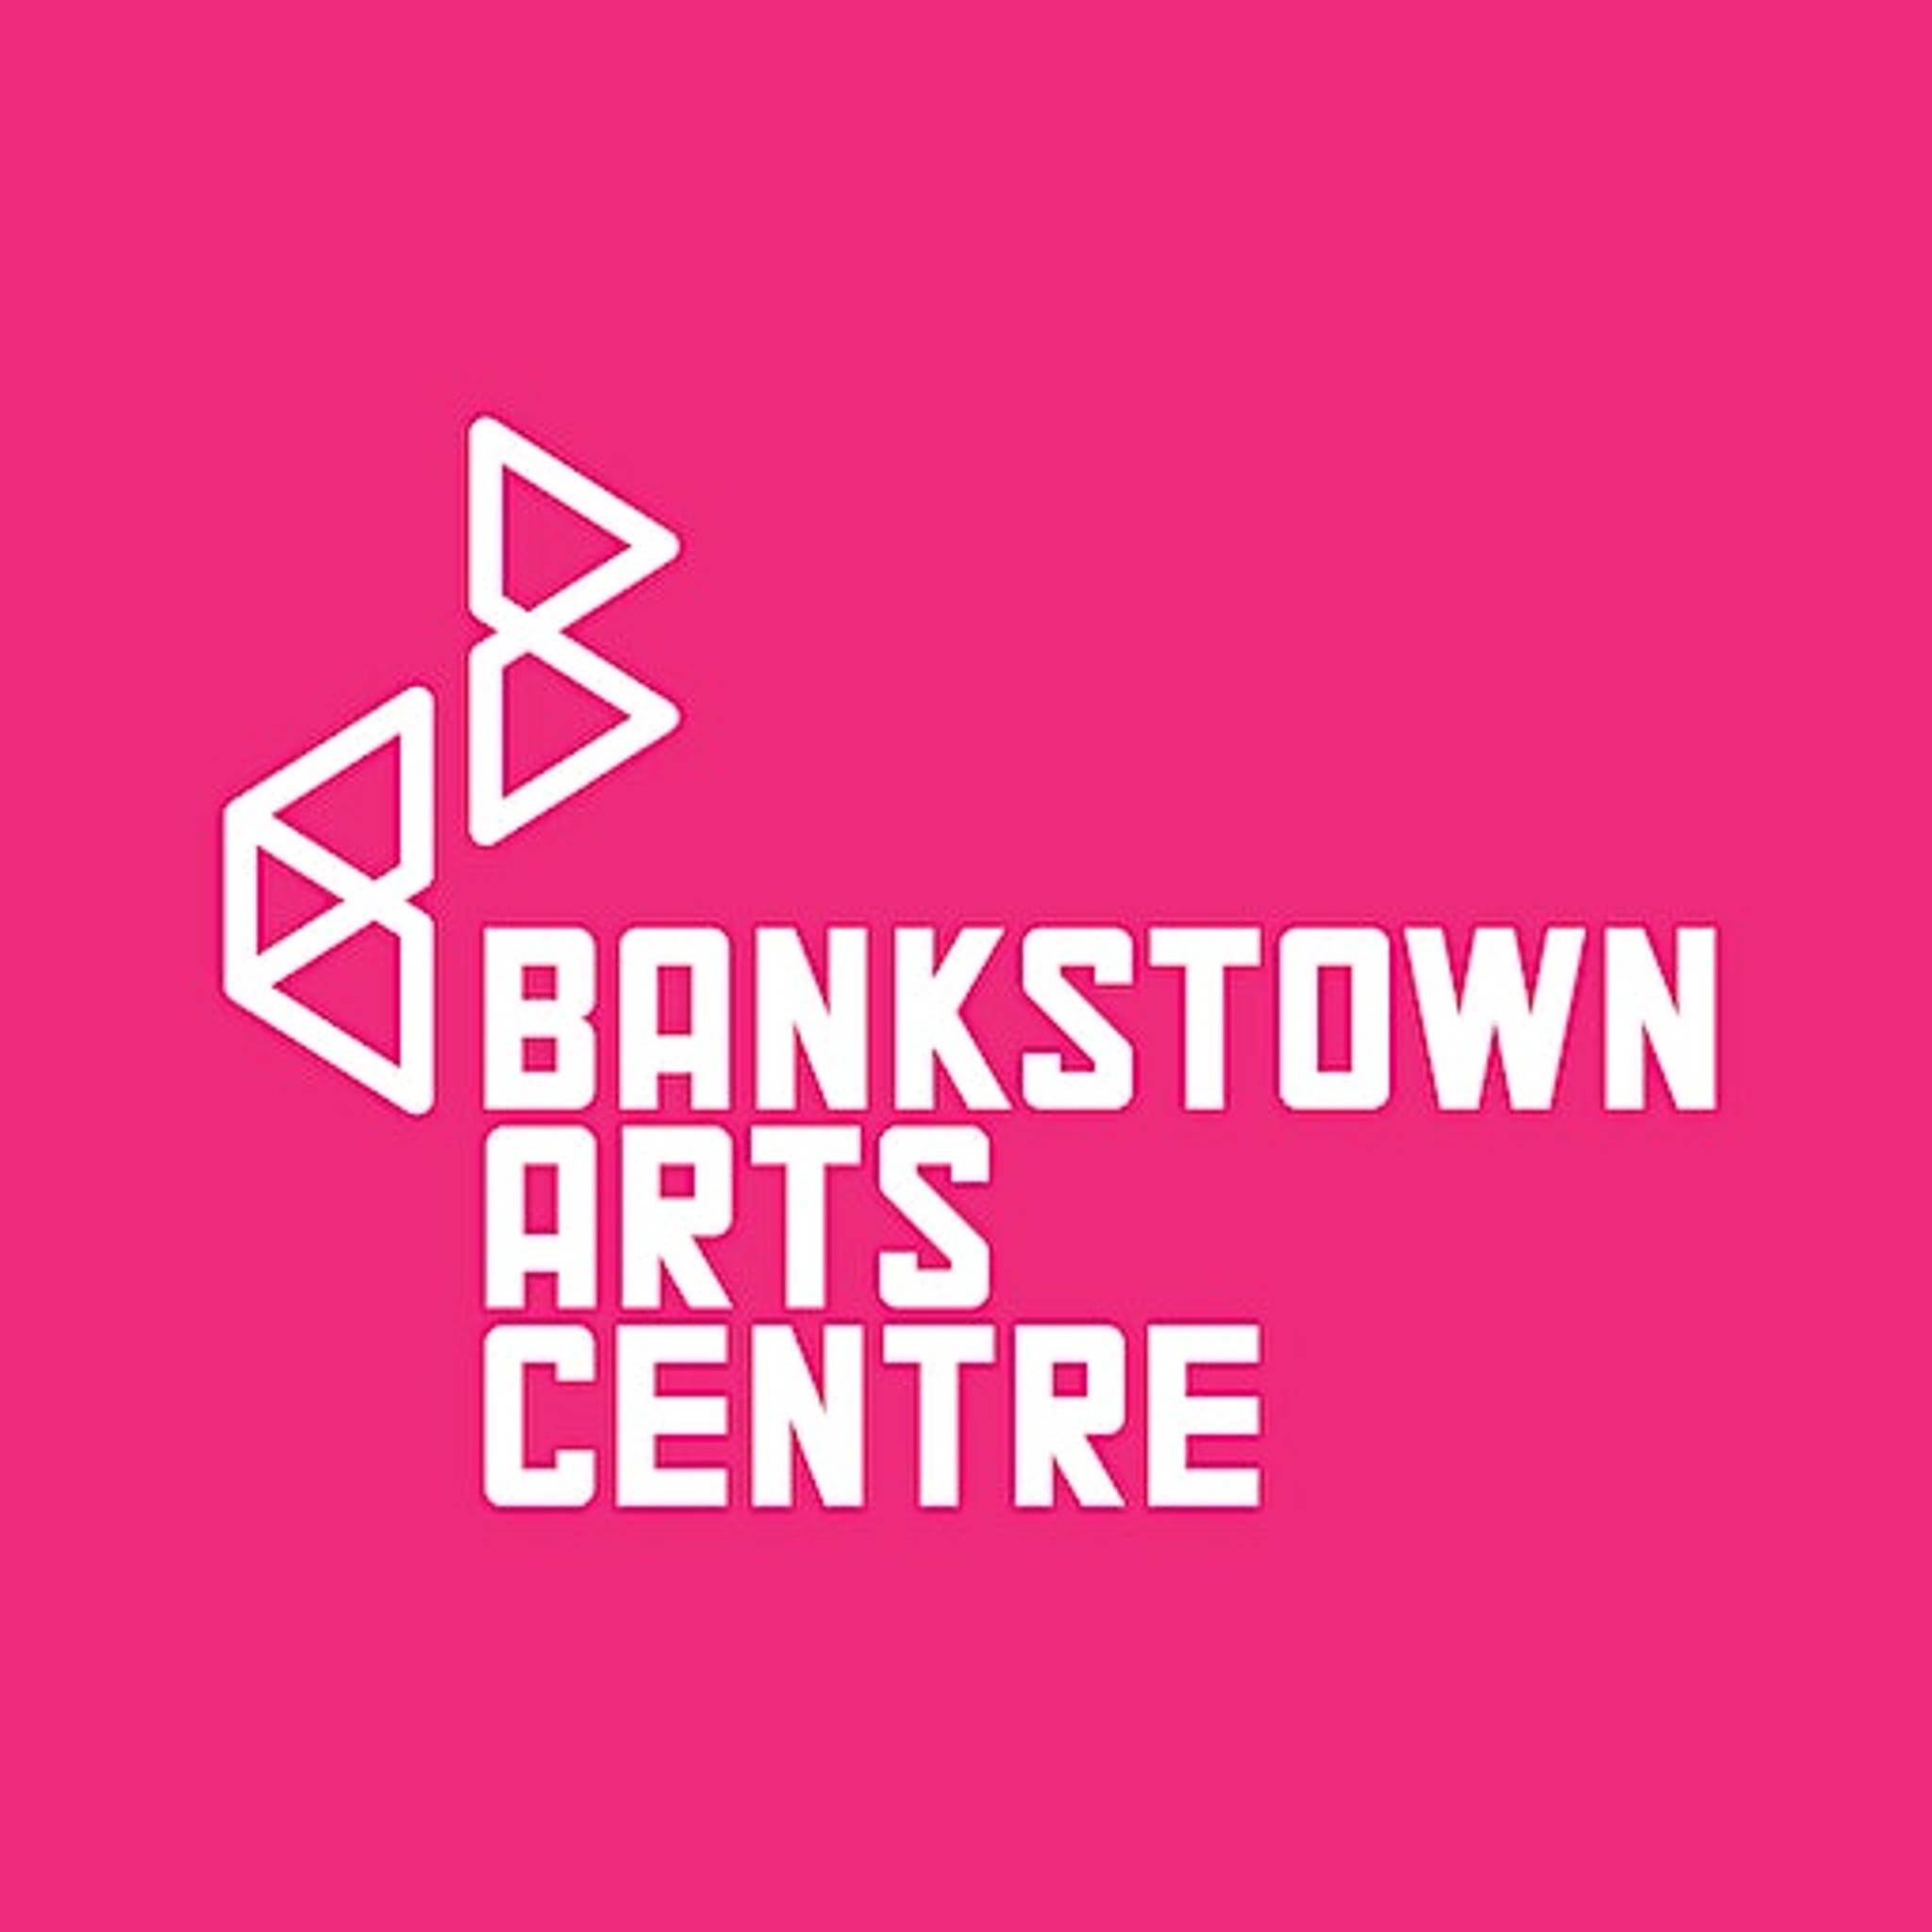 &mdash;Bankstown Arts Centre